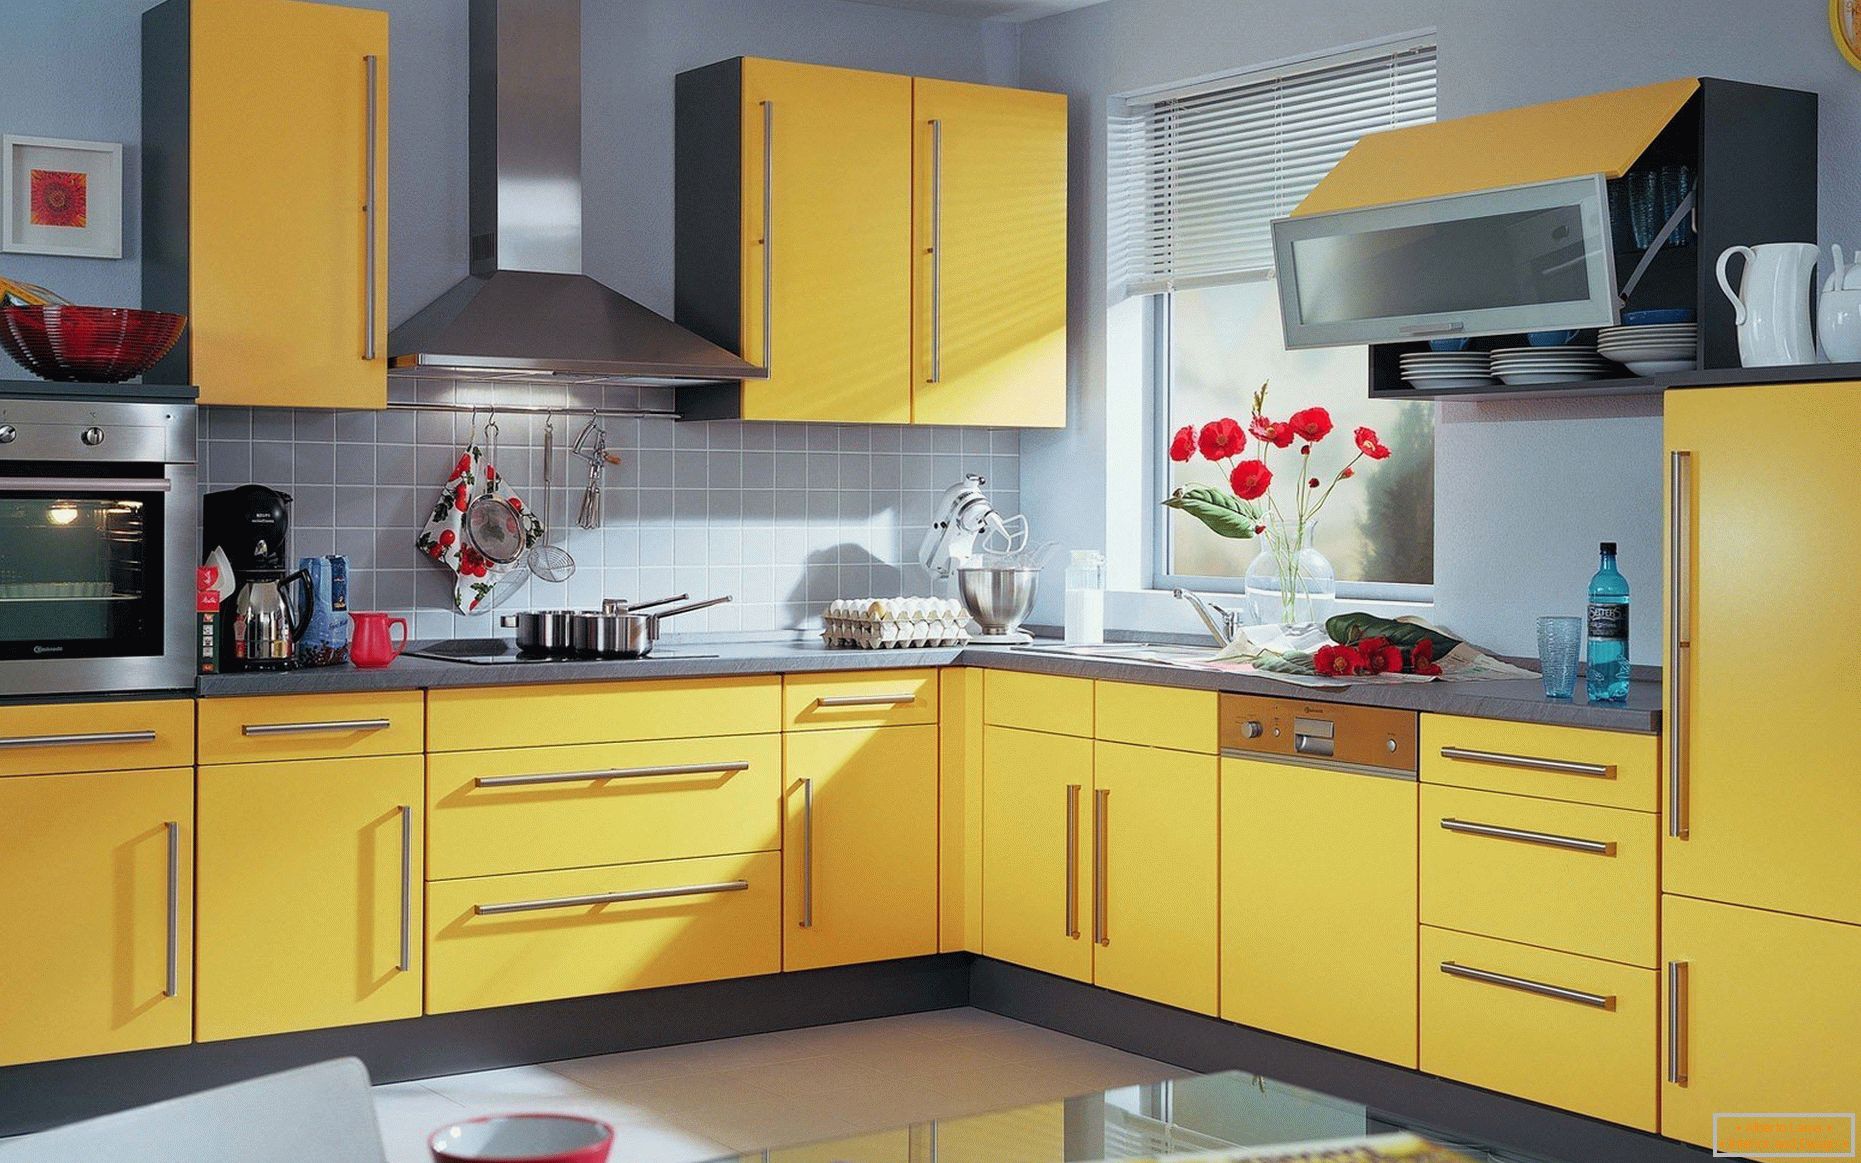 Ѕидови во пастелни бои, жолта кујна